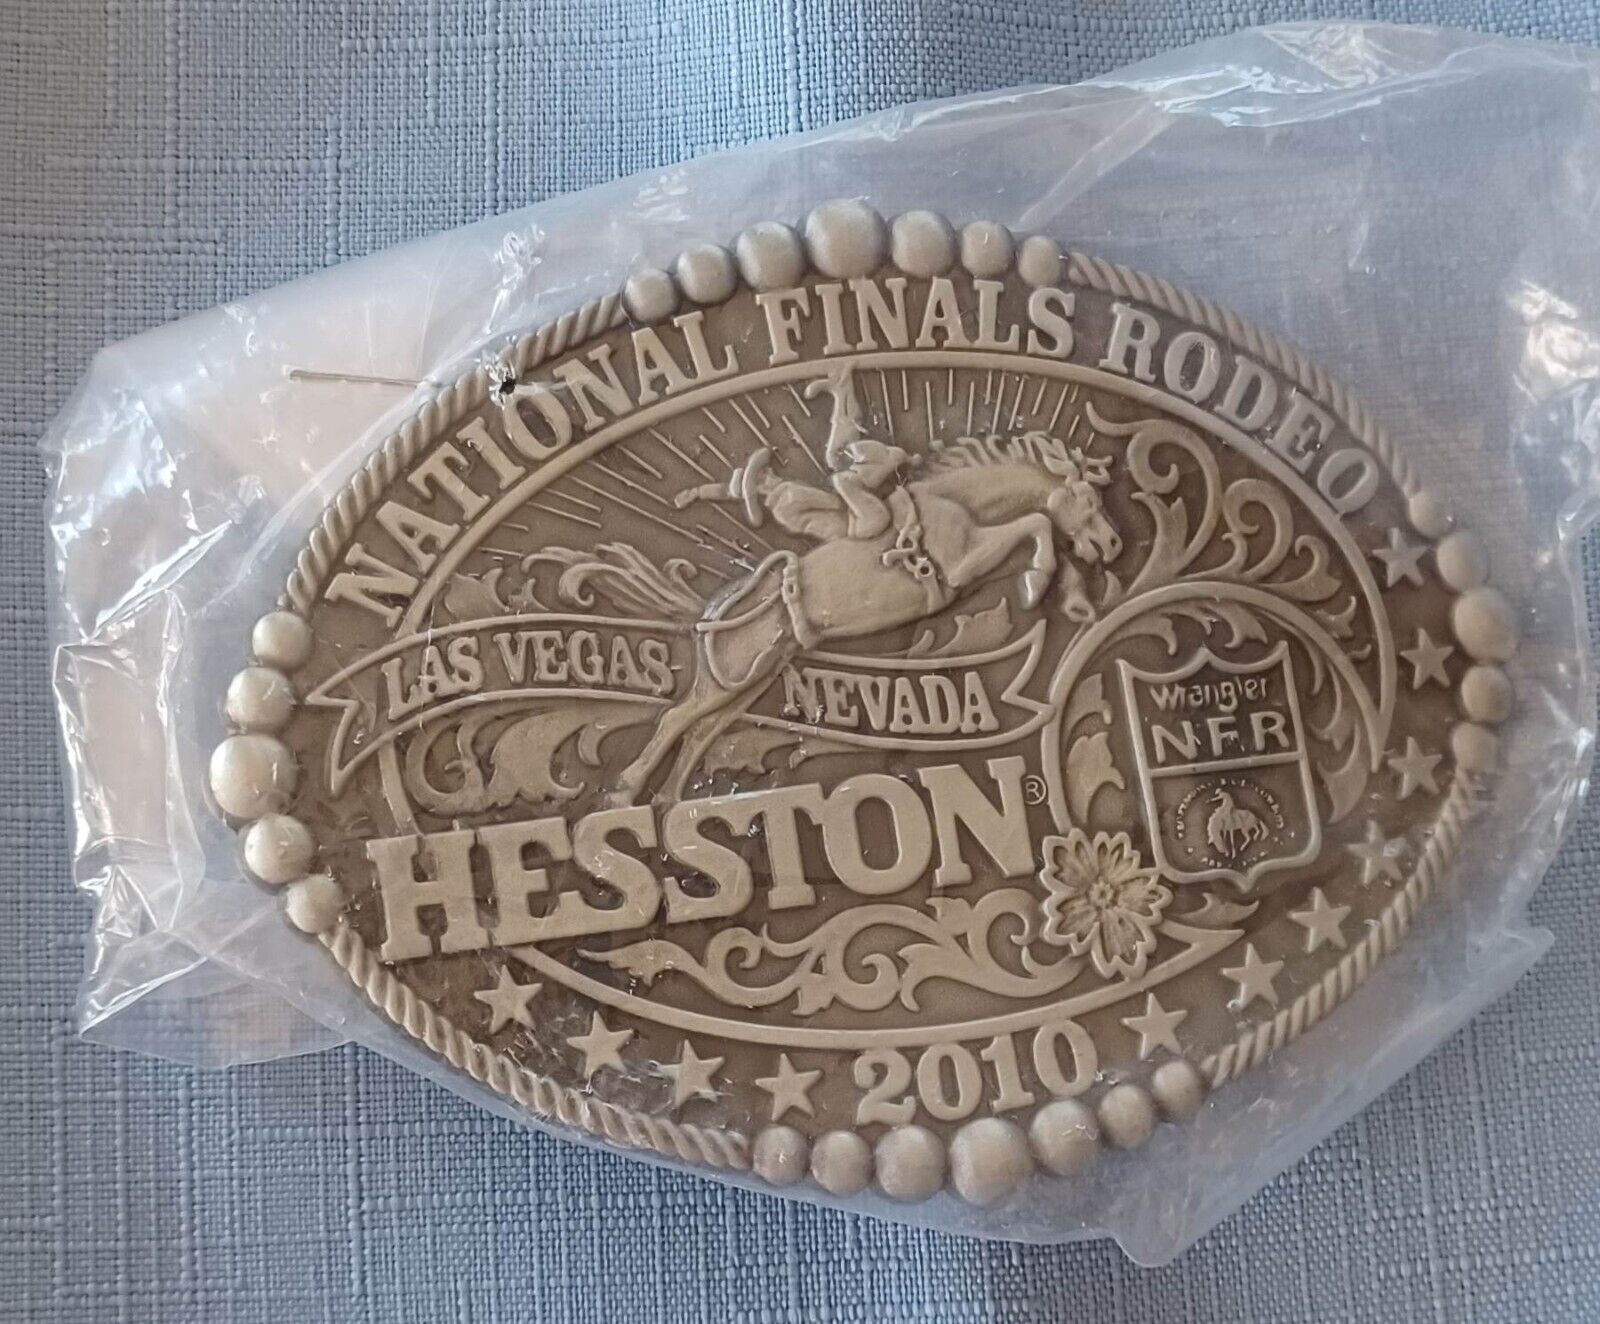 Brand New 2010 Hesston NFR Rodeo Belt Buckle Original Packaging